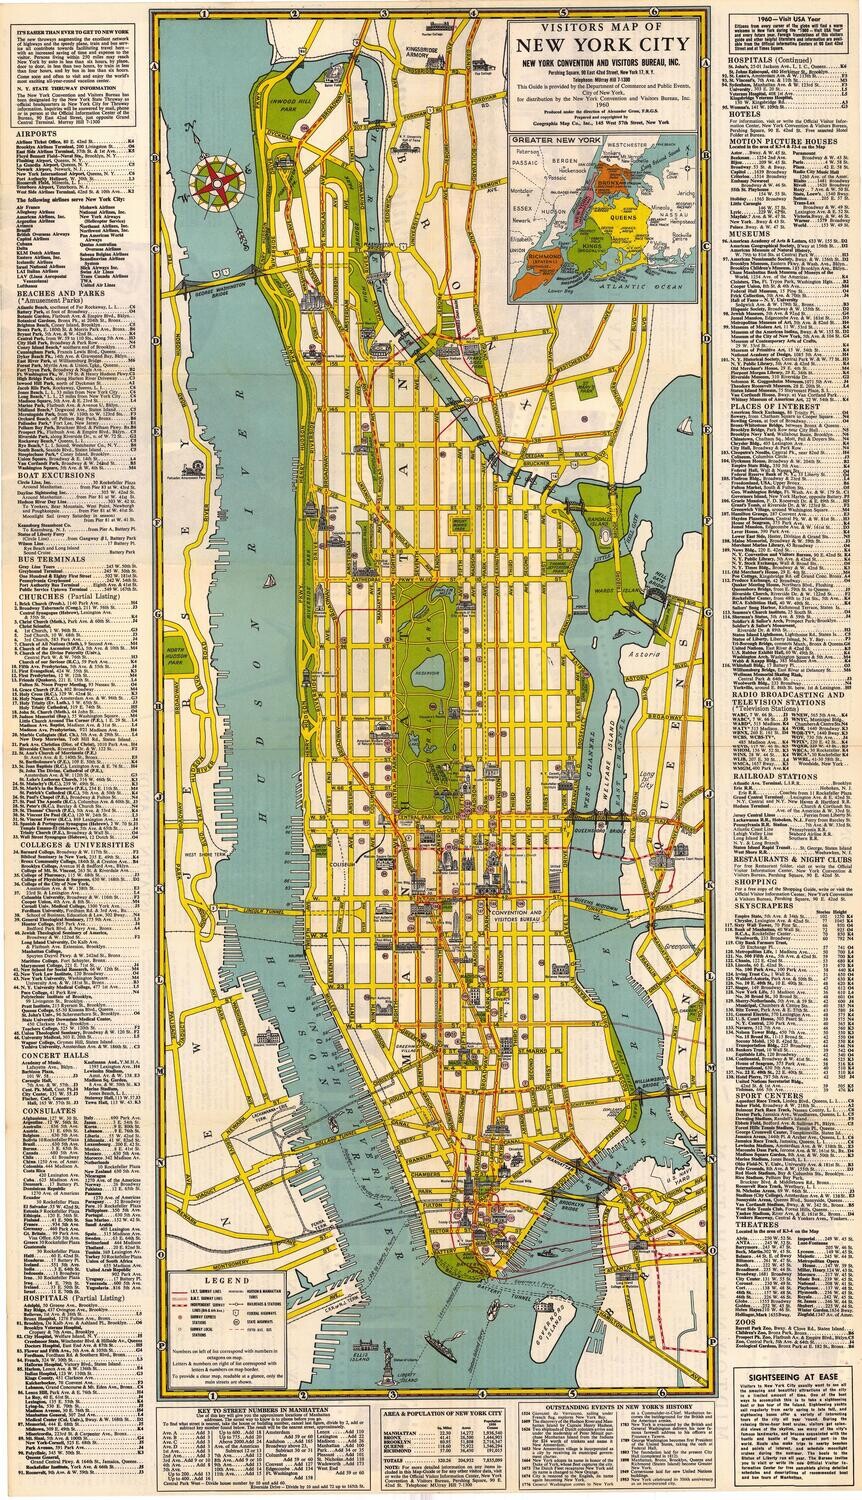 1959 New York City folding map by Hagstrom